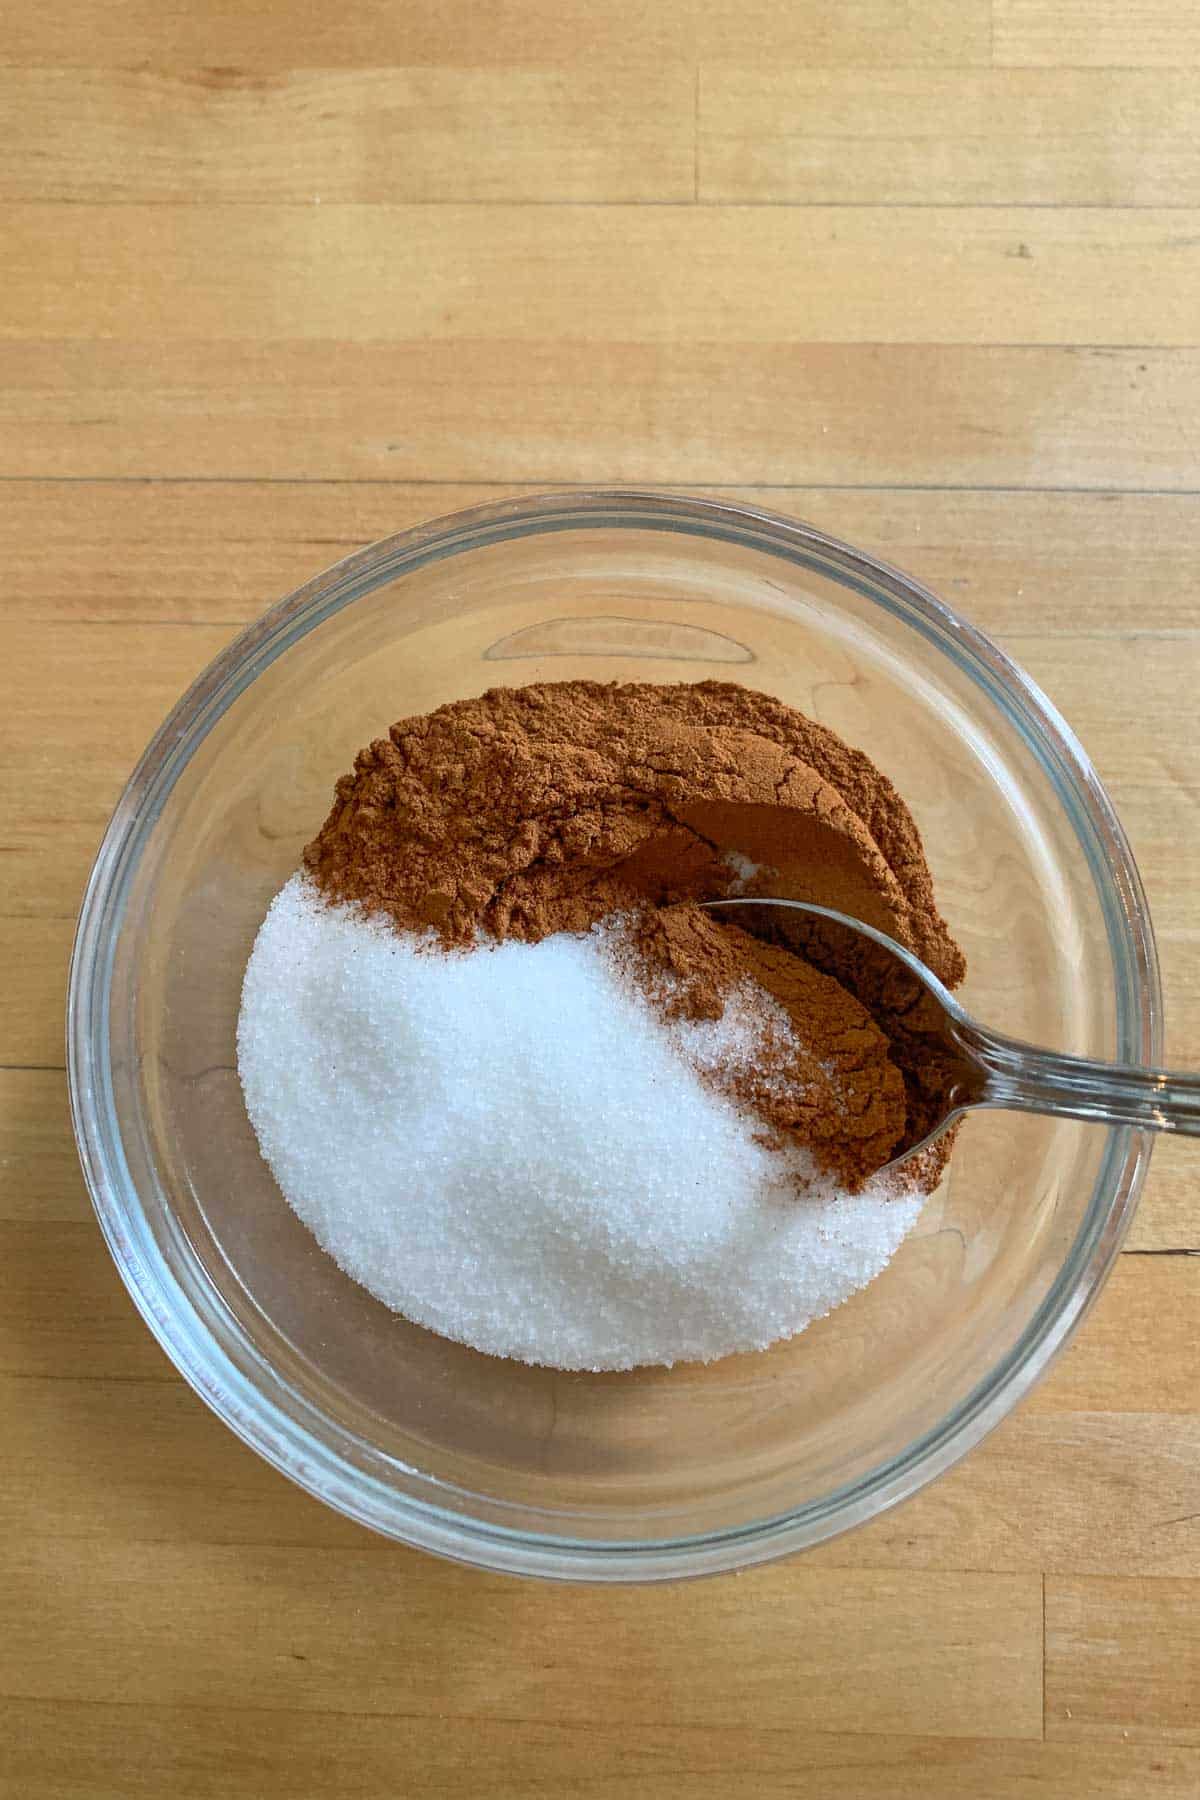 sugar and cinnamon in a bowl